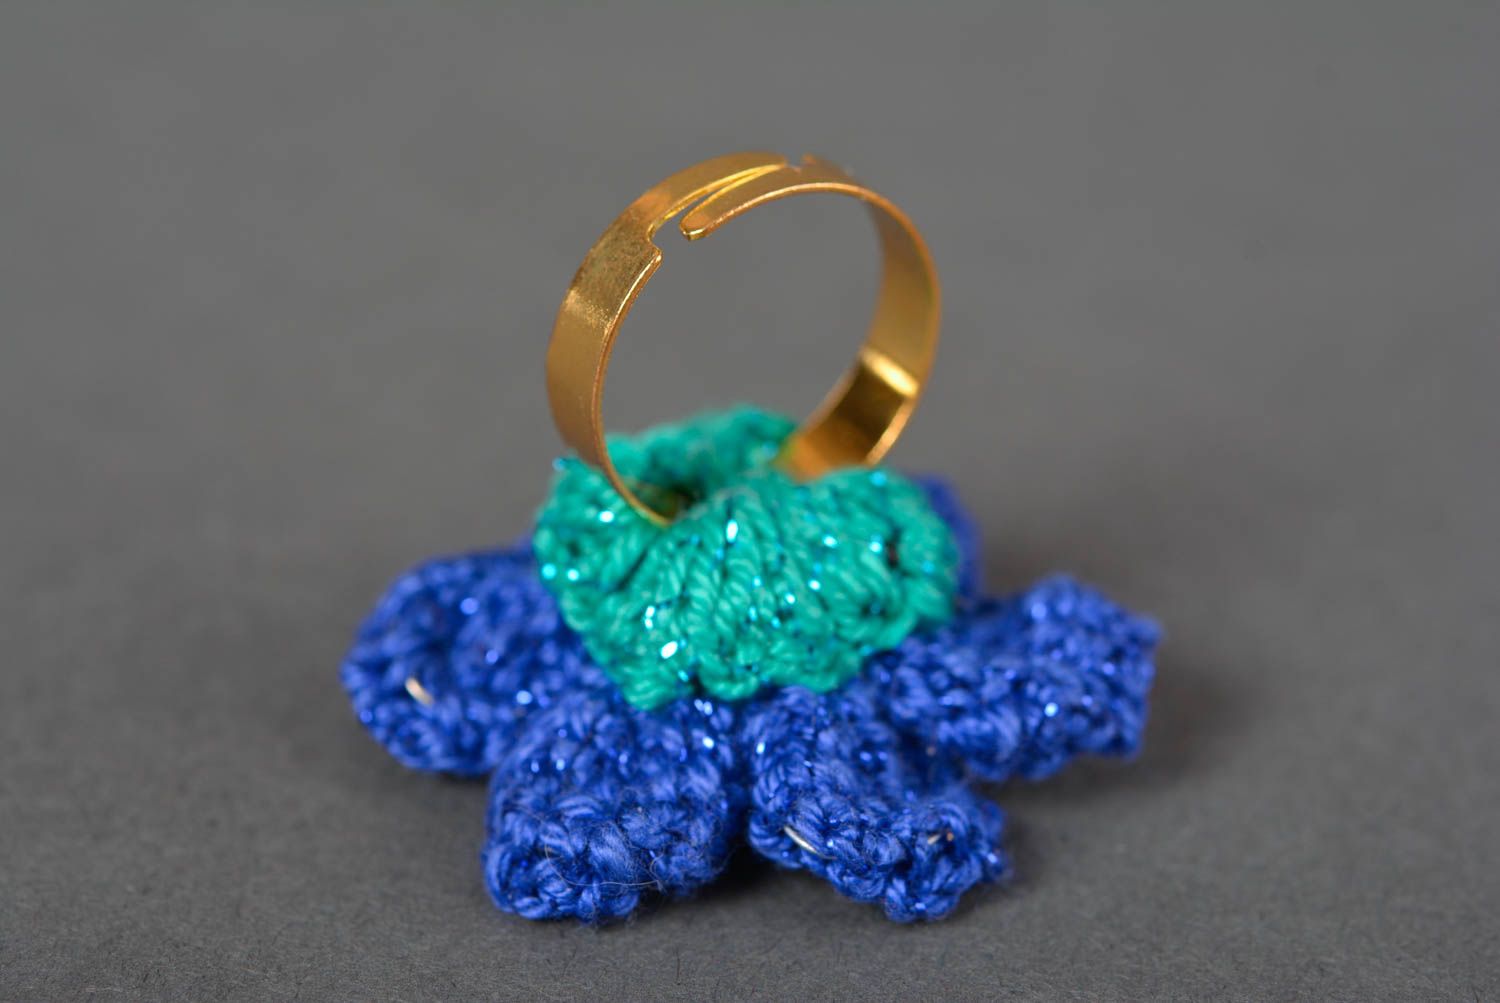 Unusual handmade flower ring designs crochet jewelry accessories for girls photo 4